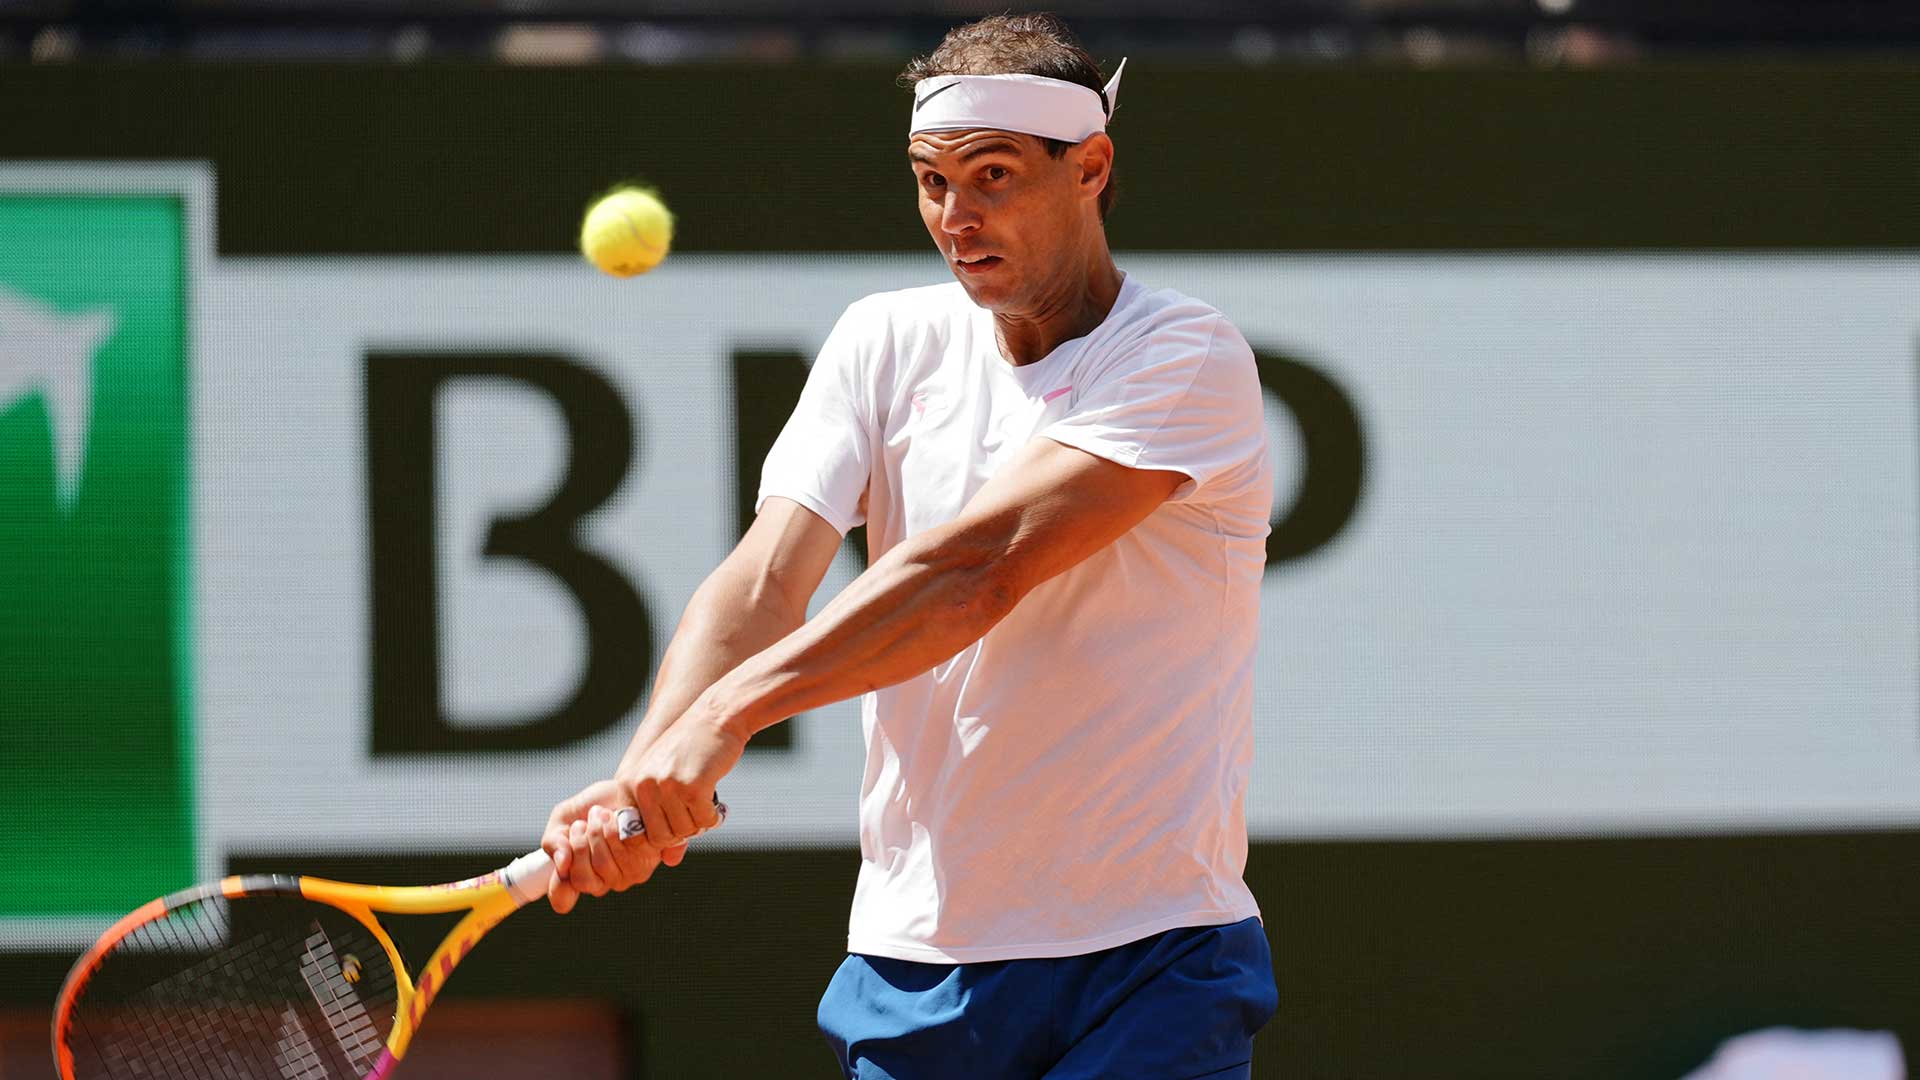 Rafael Nadal has won Roland Garros a record 14 times.